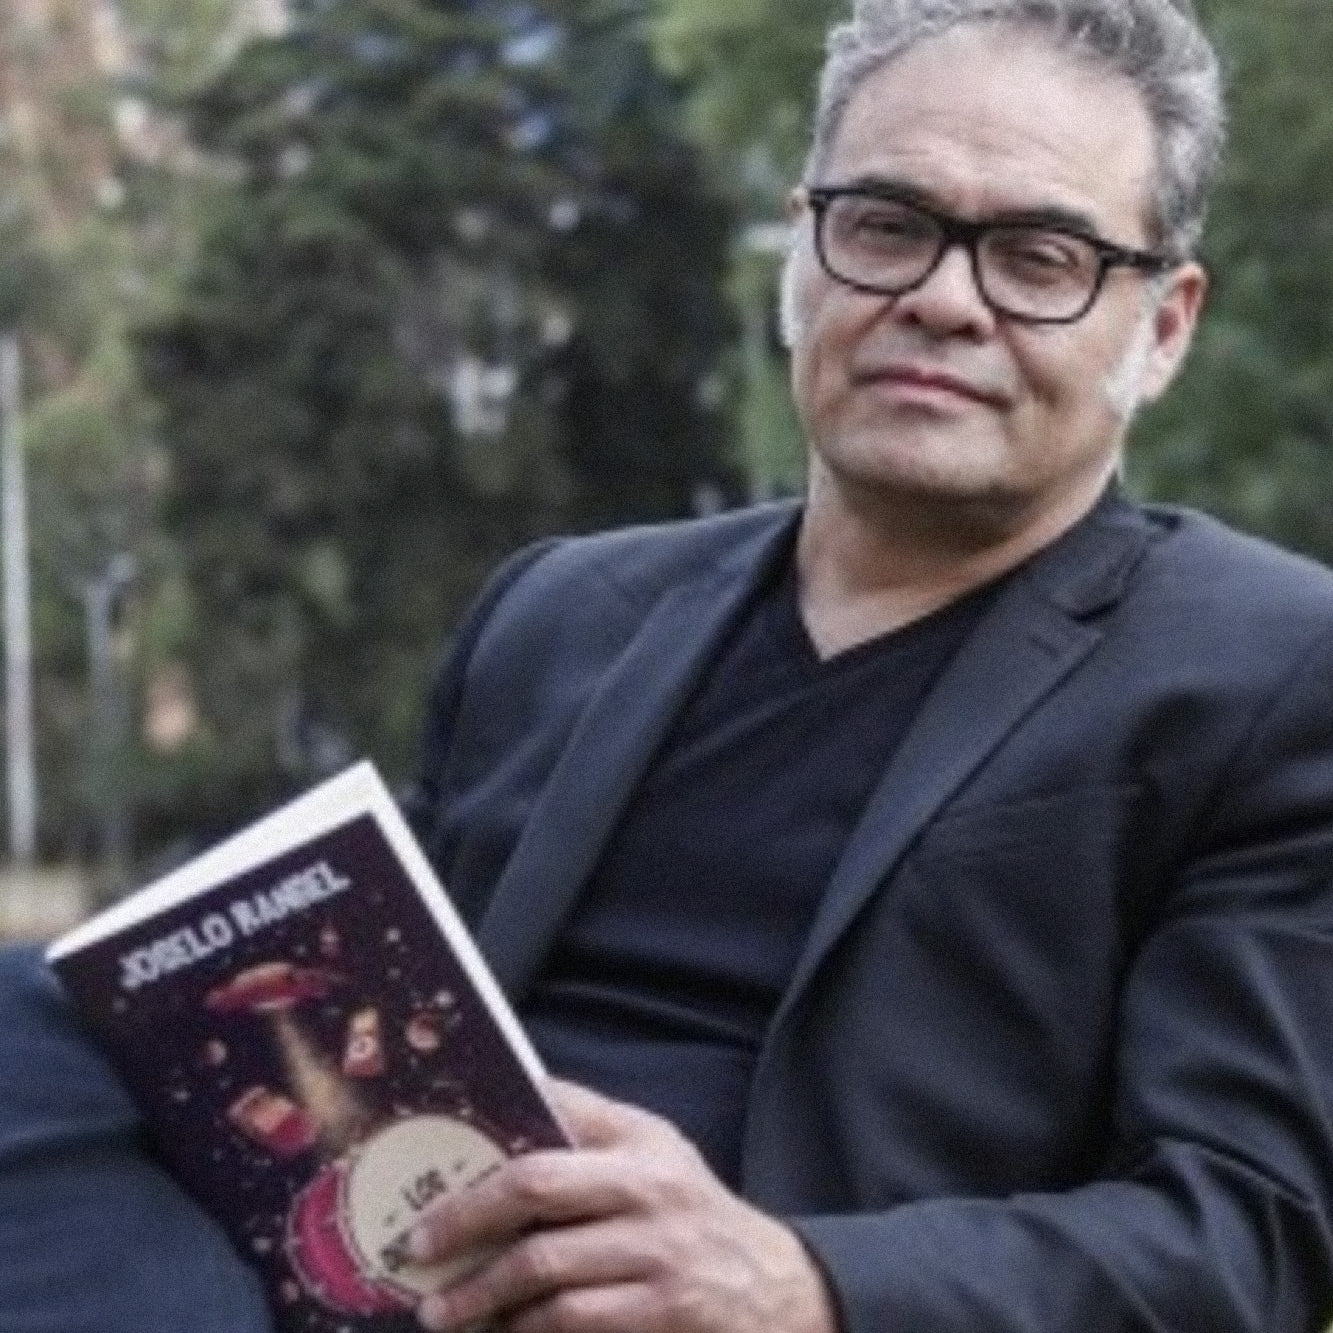 Joselo Rangel (Café Tacvba) - Los Desesperados - Libro - Importado!!!